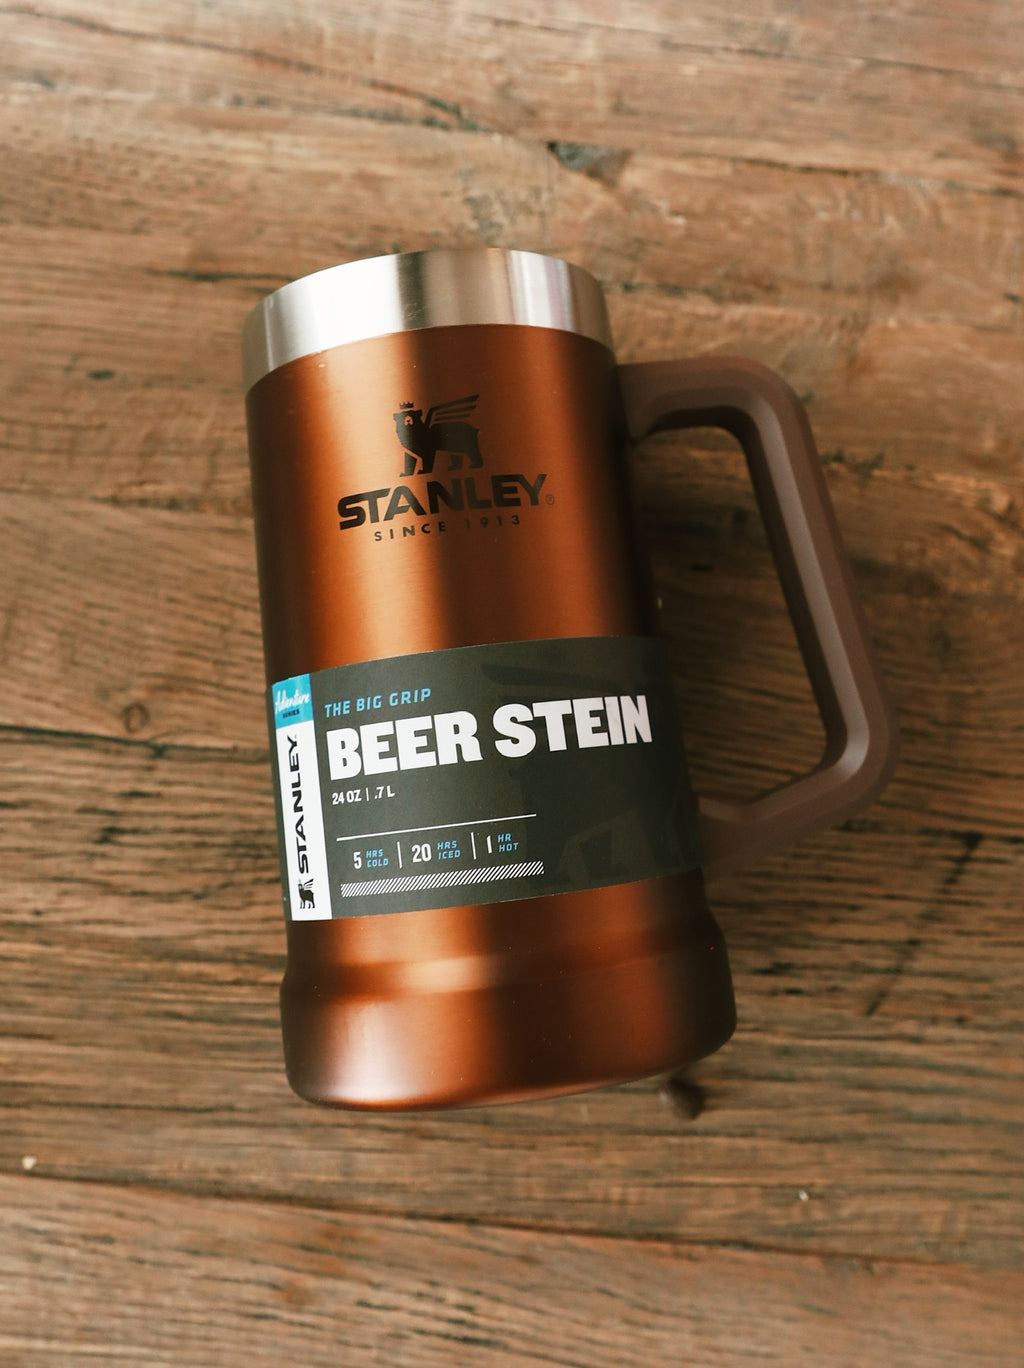 Stanley Beer Stein Bottle Opener 24 oz with Logo